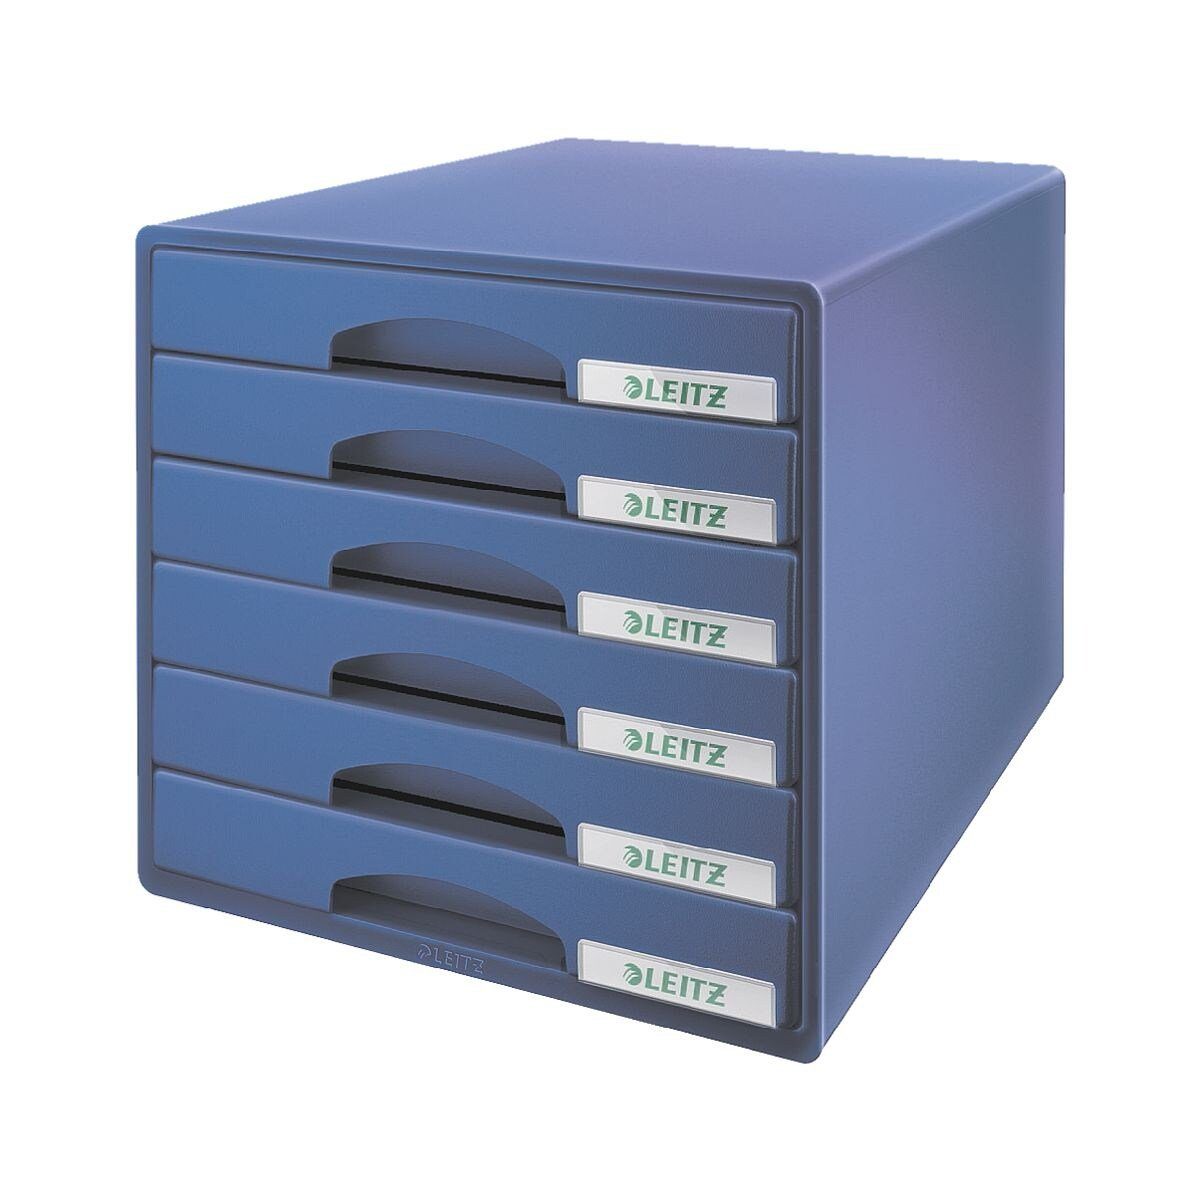 LEITZ Schubladenbox PLUS, 6 blau geschlossen, mit Schubladen, stapelbar